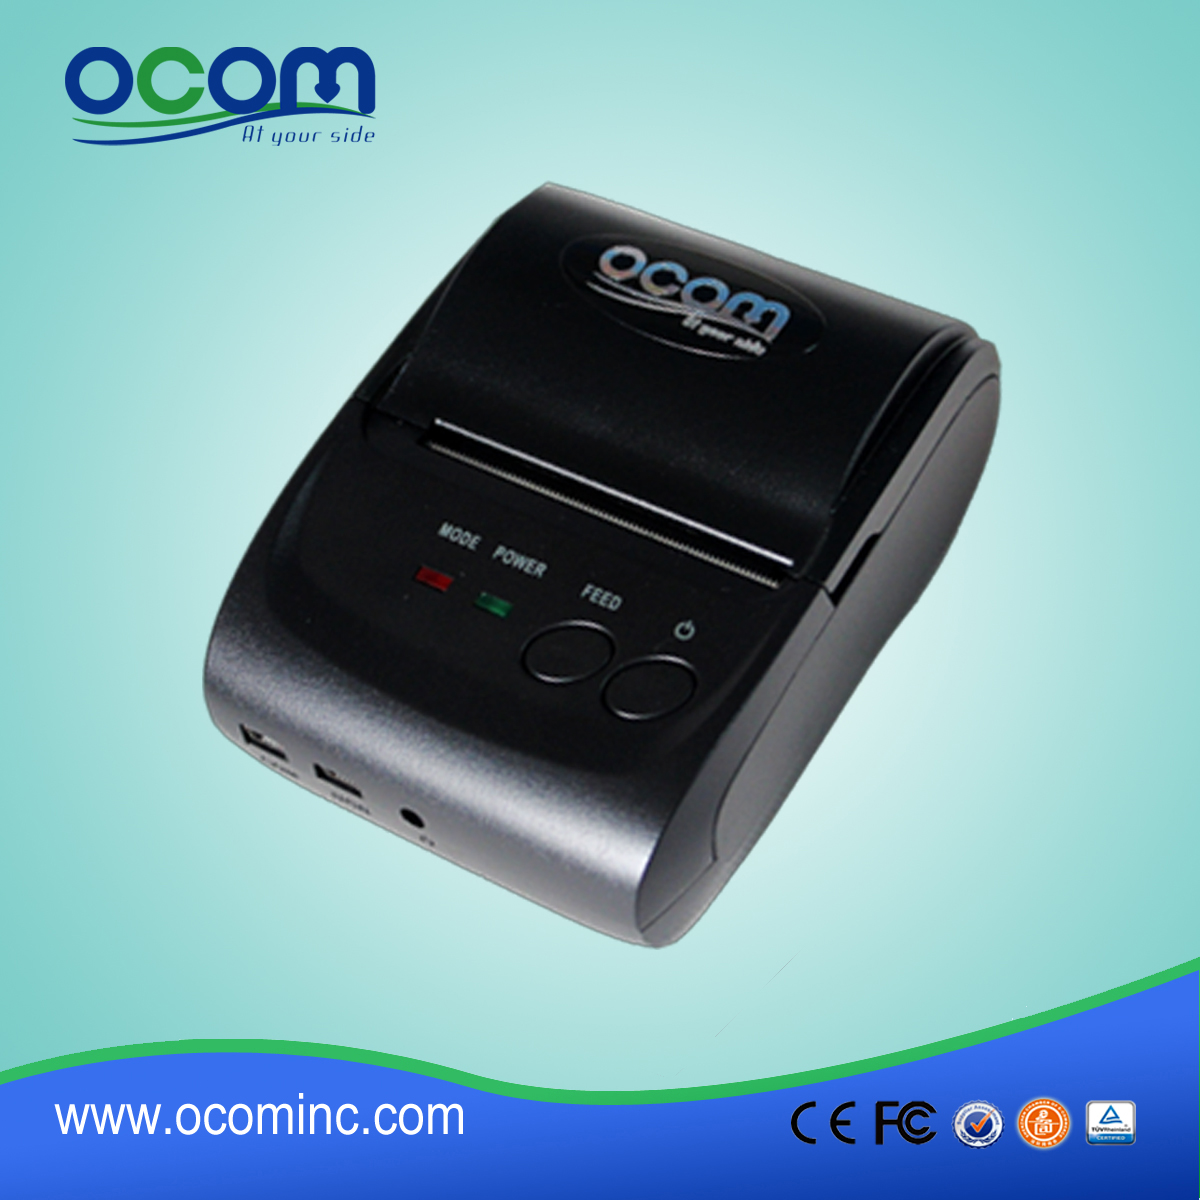 OCPP-M05: hoogwaardige mobiele bluetooth printer 58mm, mini-USB-thermische printer